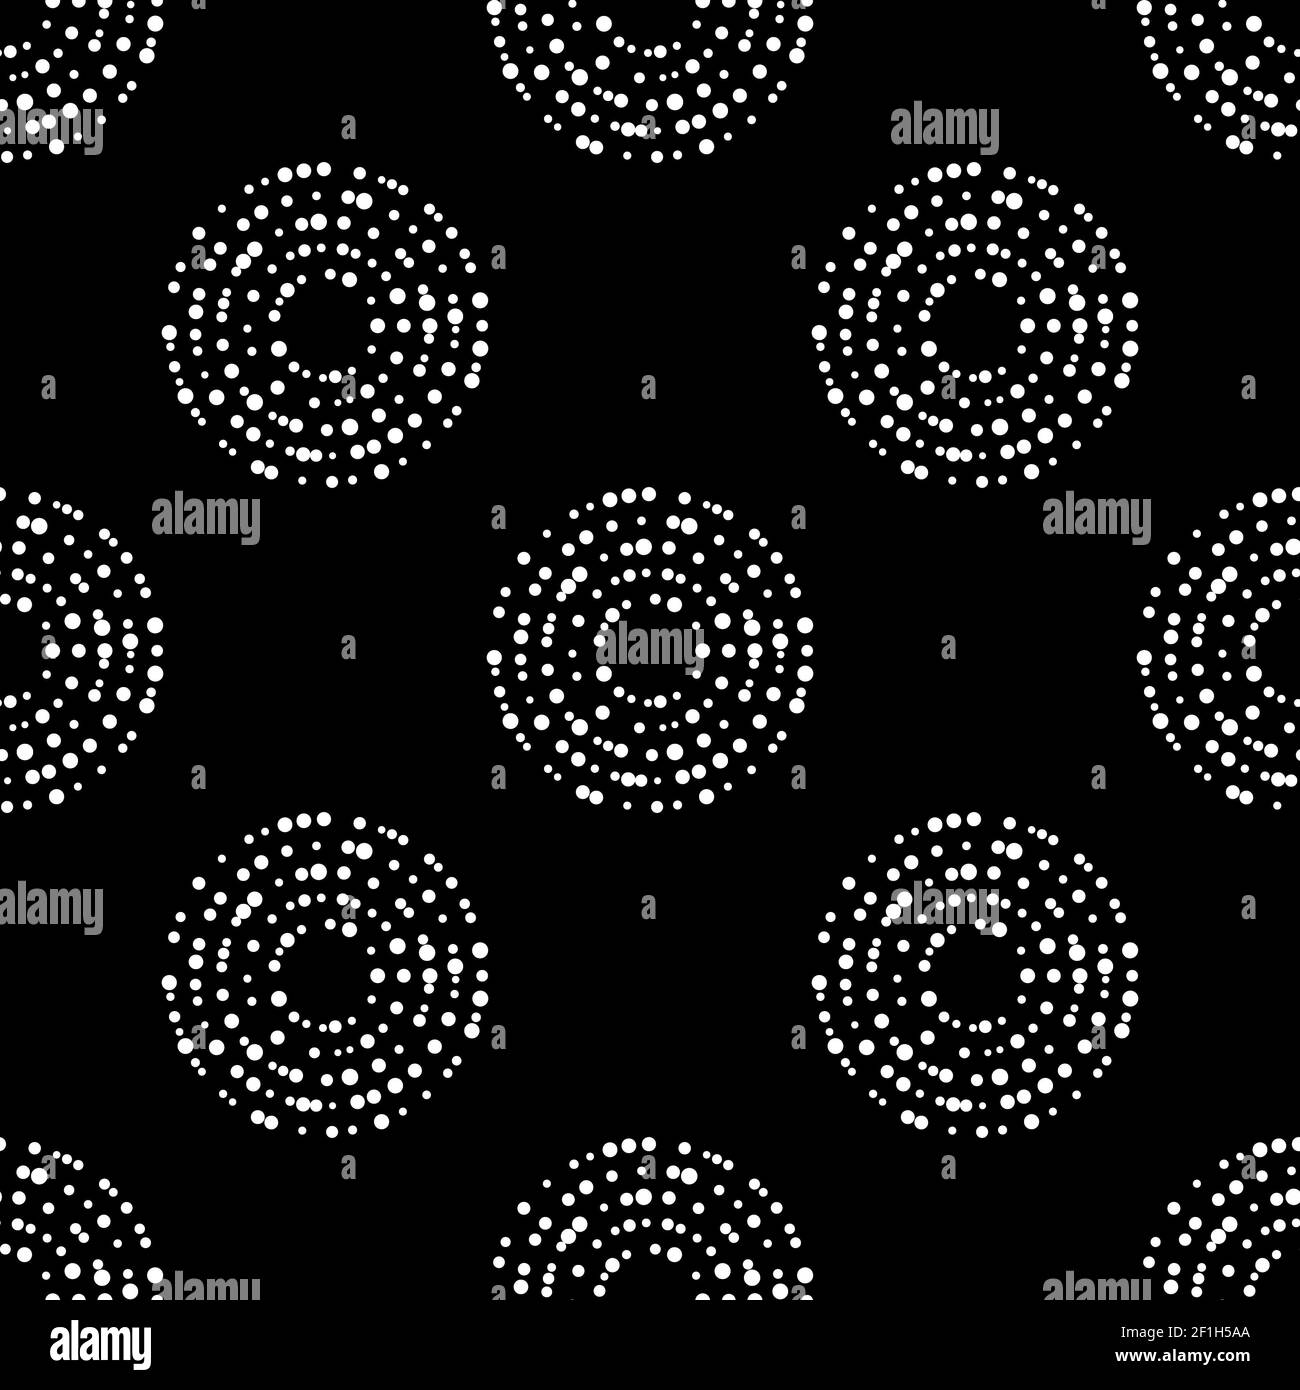 Art black graphic geometric seamless pattern Stock Photo